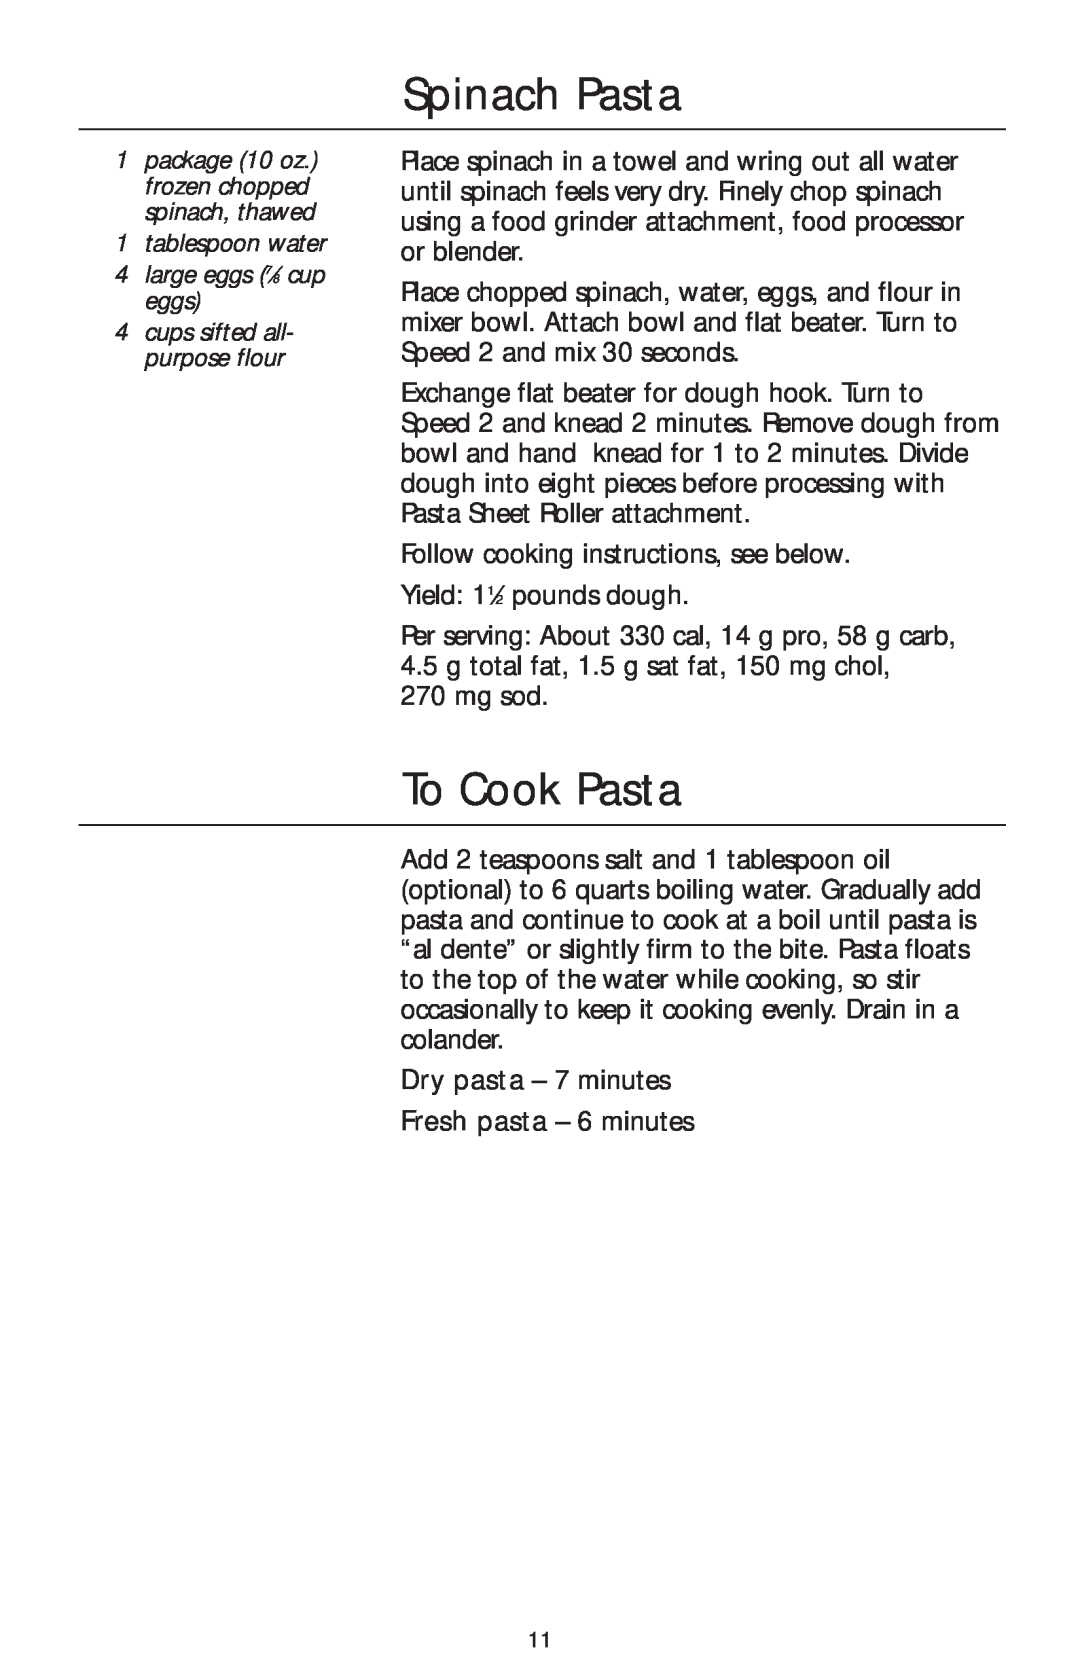 KitchenAid KPCA manual Spinach Pasta, To Cook Pasta, Fresh pasta - 6 minutes 